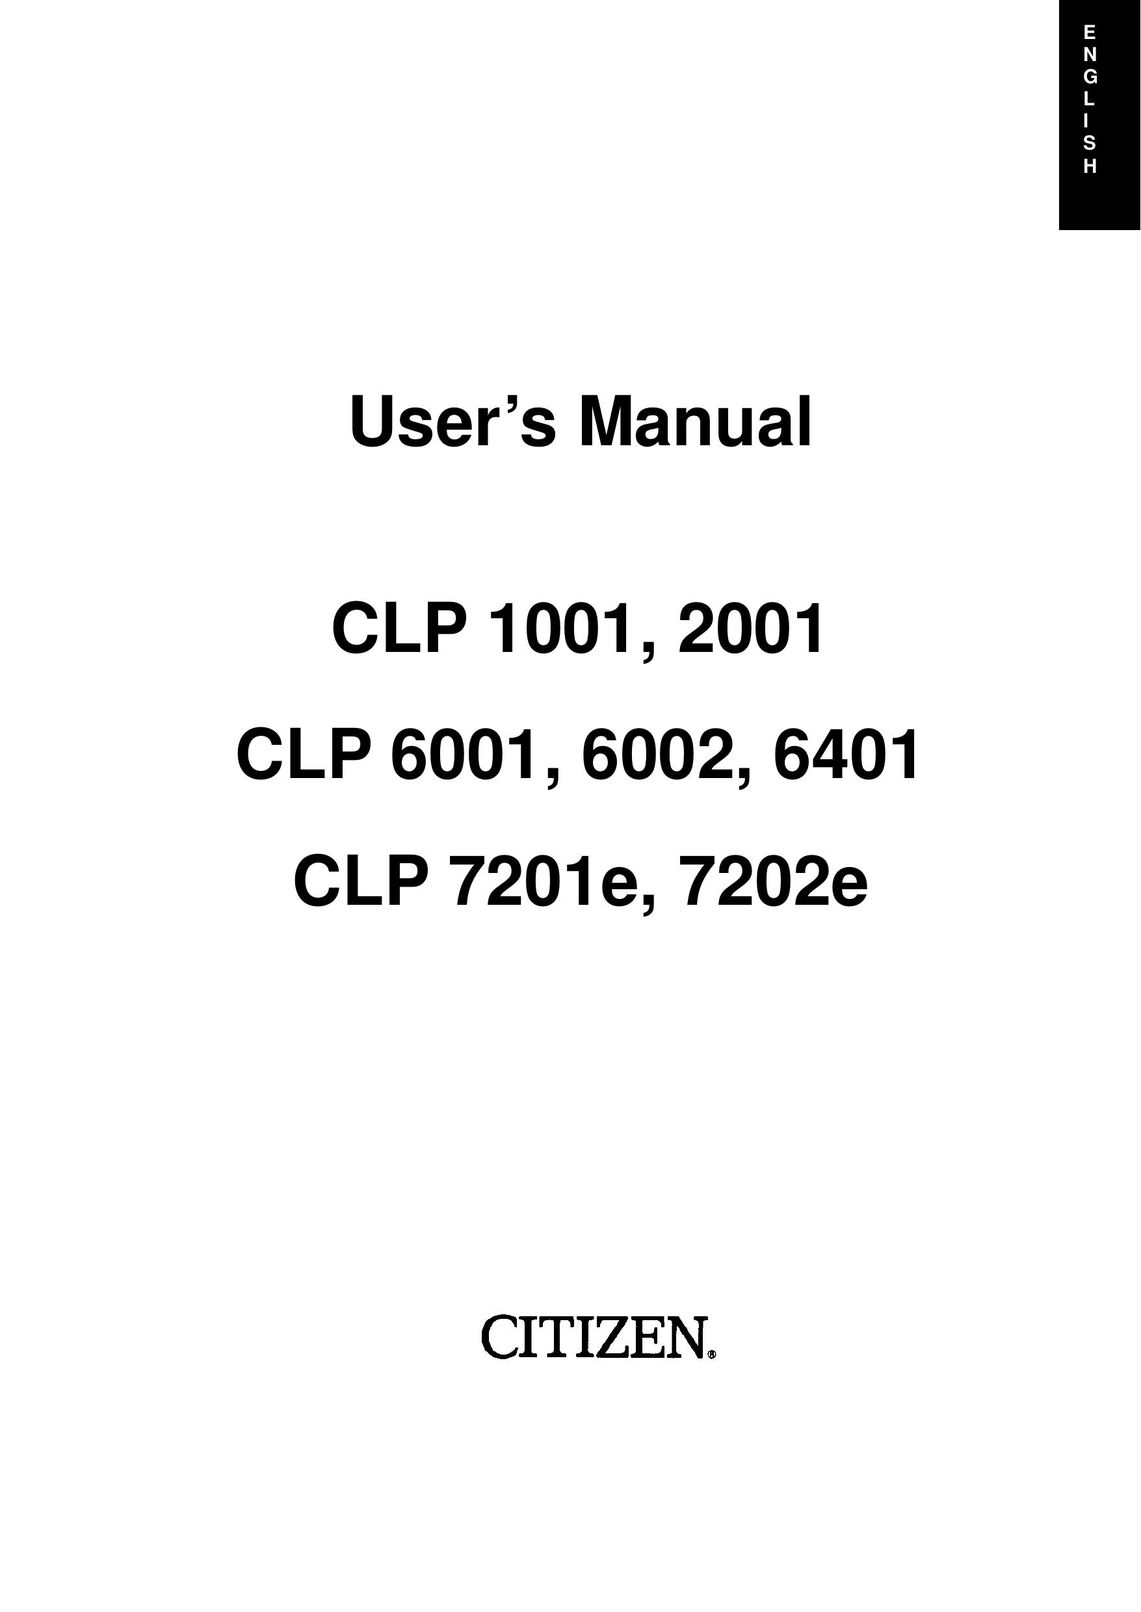 Citizen Systems CLP 1001, CPL 2001, CLP 6001, CPL 6002, CPL 6401, CPL 7201e, CPL 7202e Printer User Manual